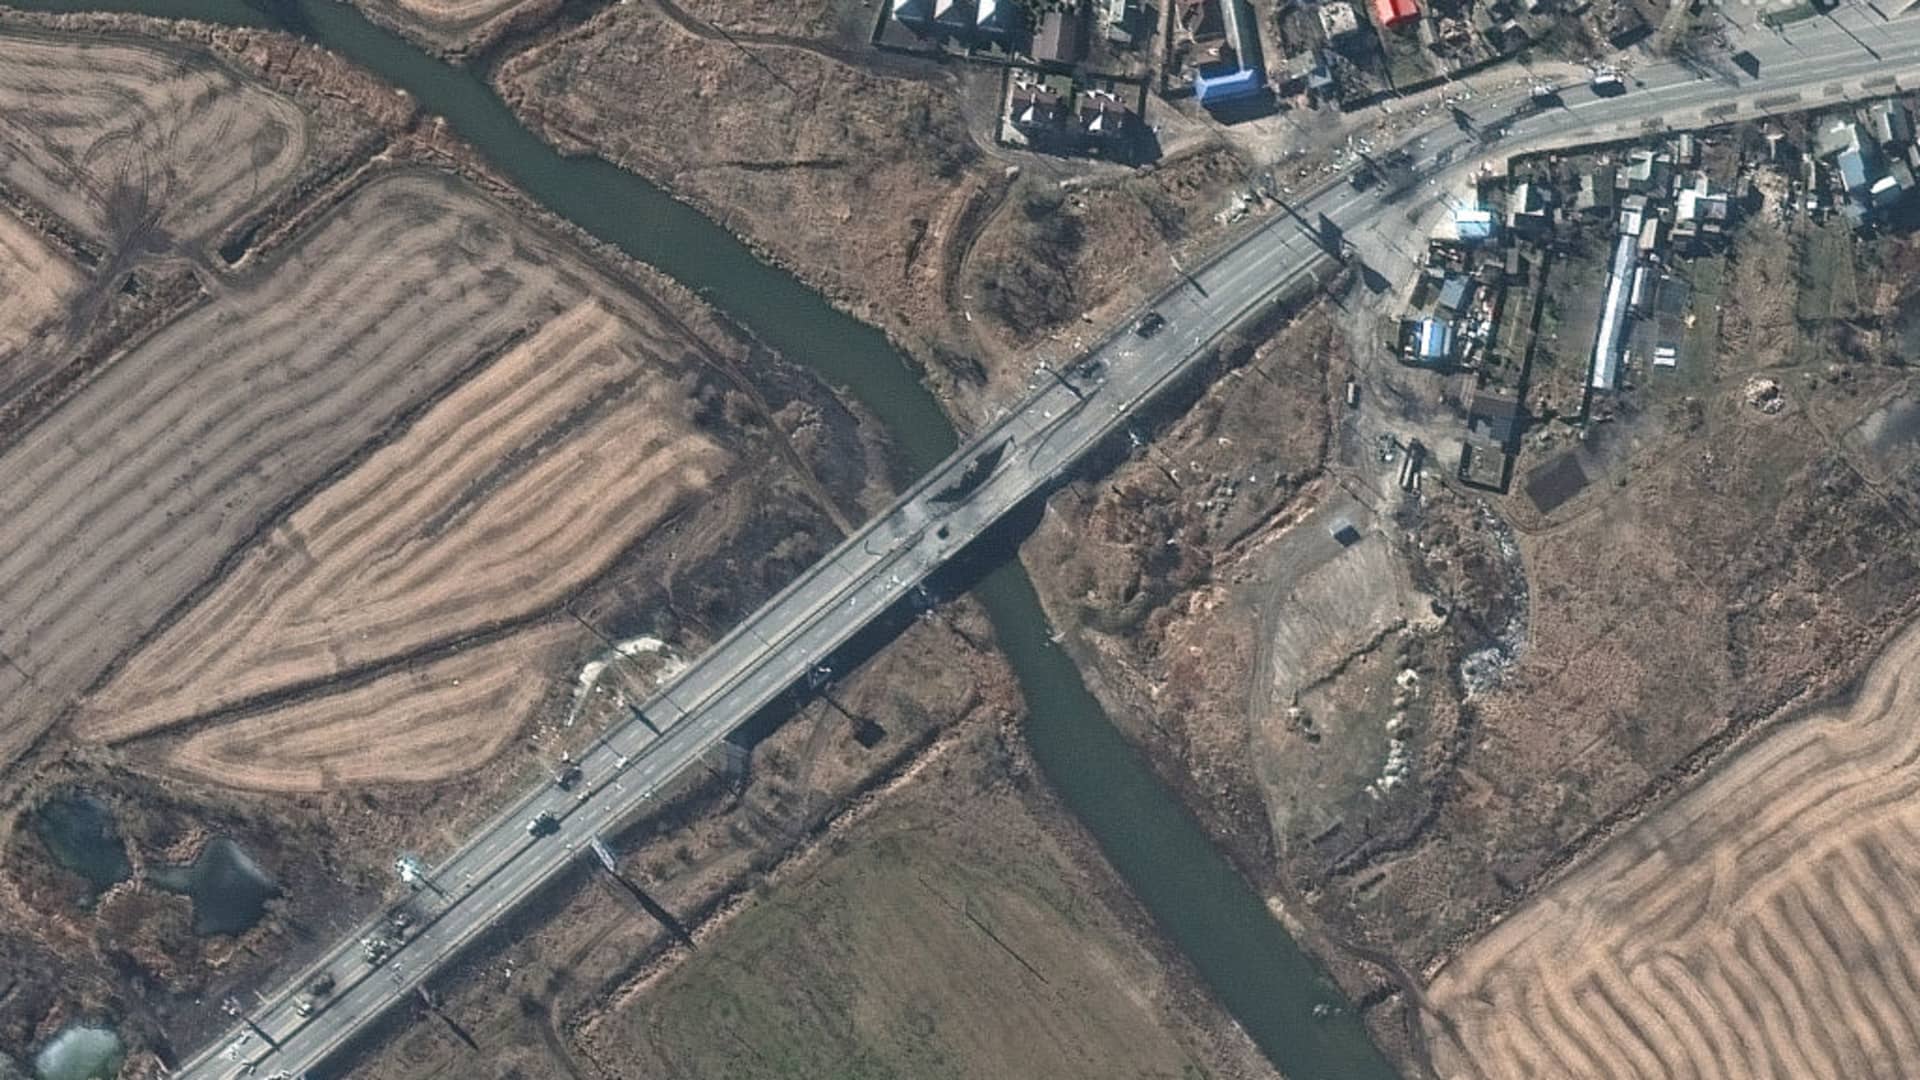 Maxar satellite imagery of destroyed vehicles and bridge damage in Irpin, Ukraine - Northwest of Kyiv.